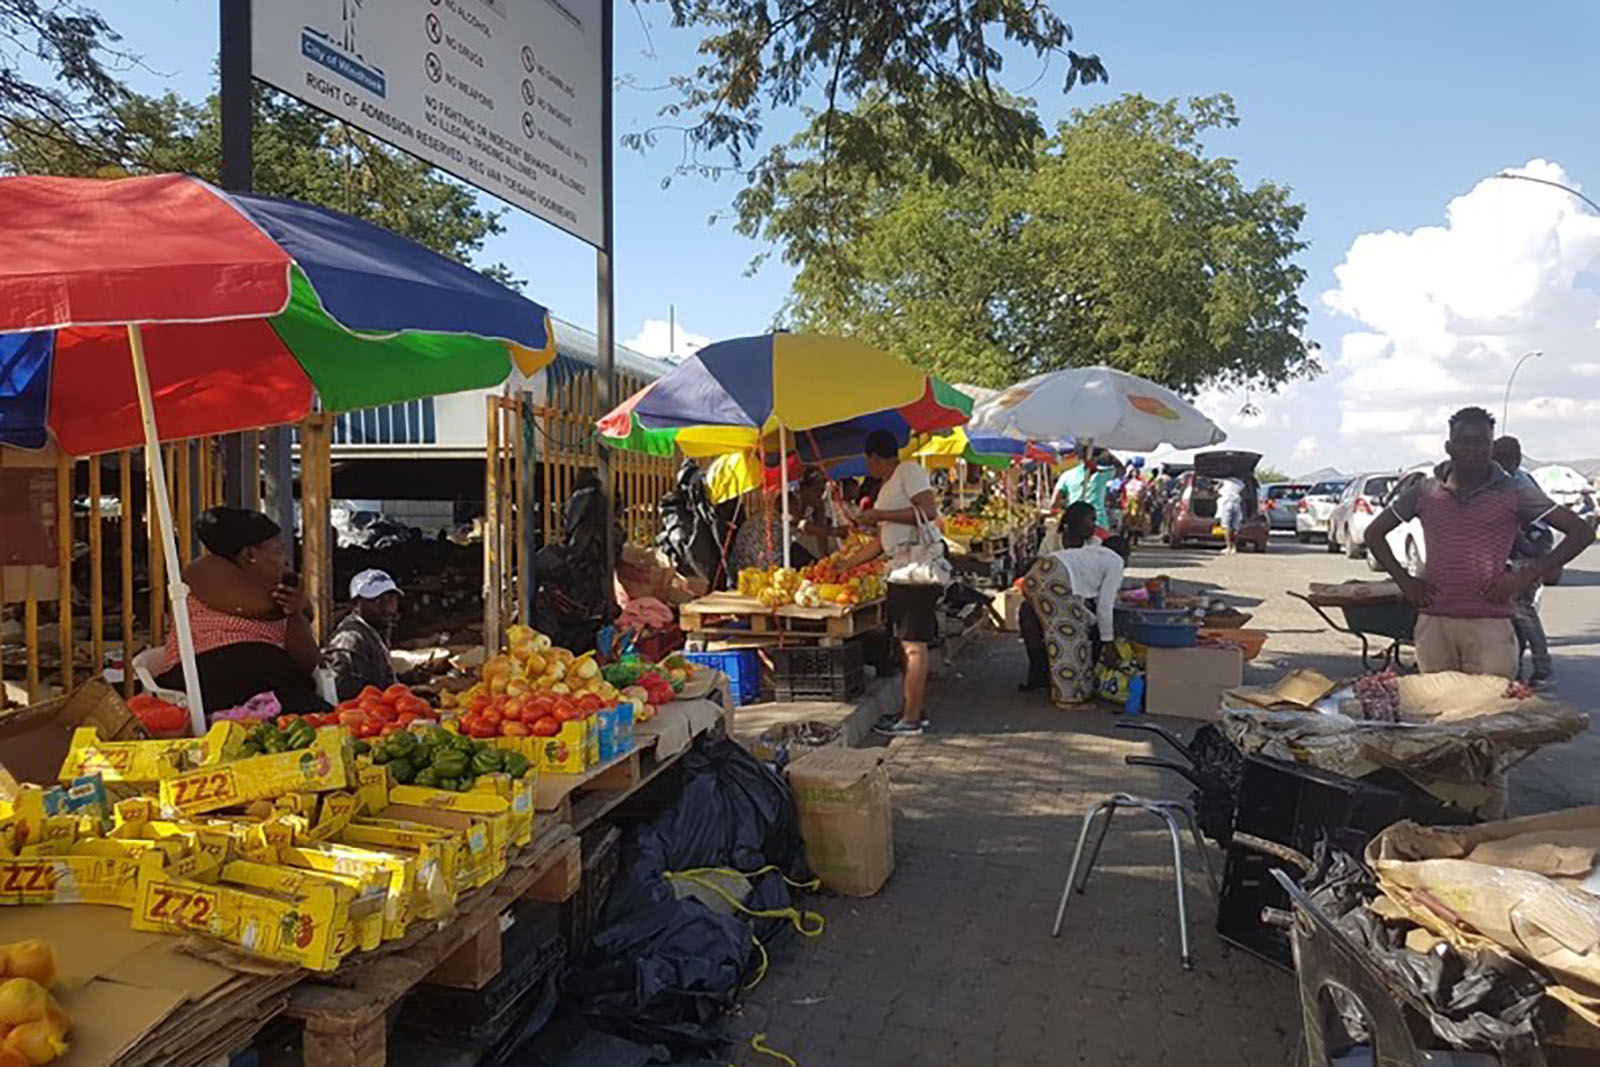 A food market set up on a sidewalk.